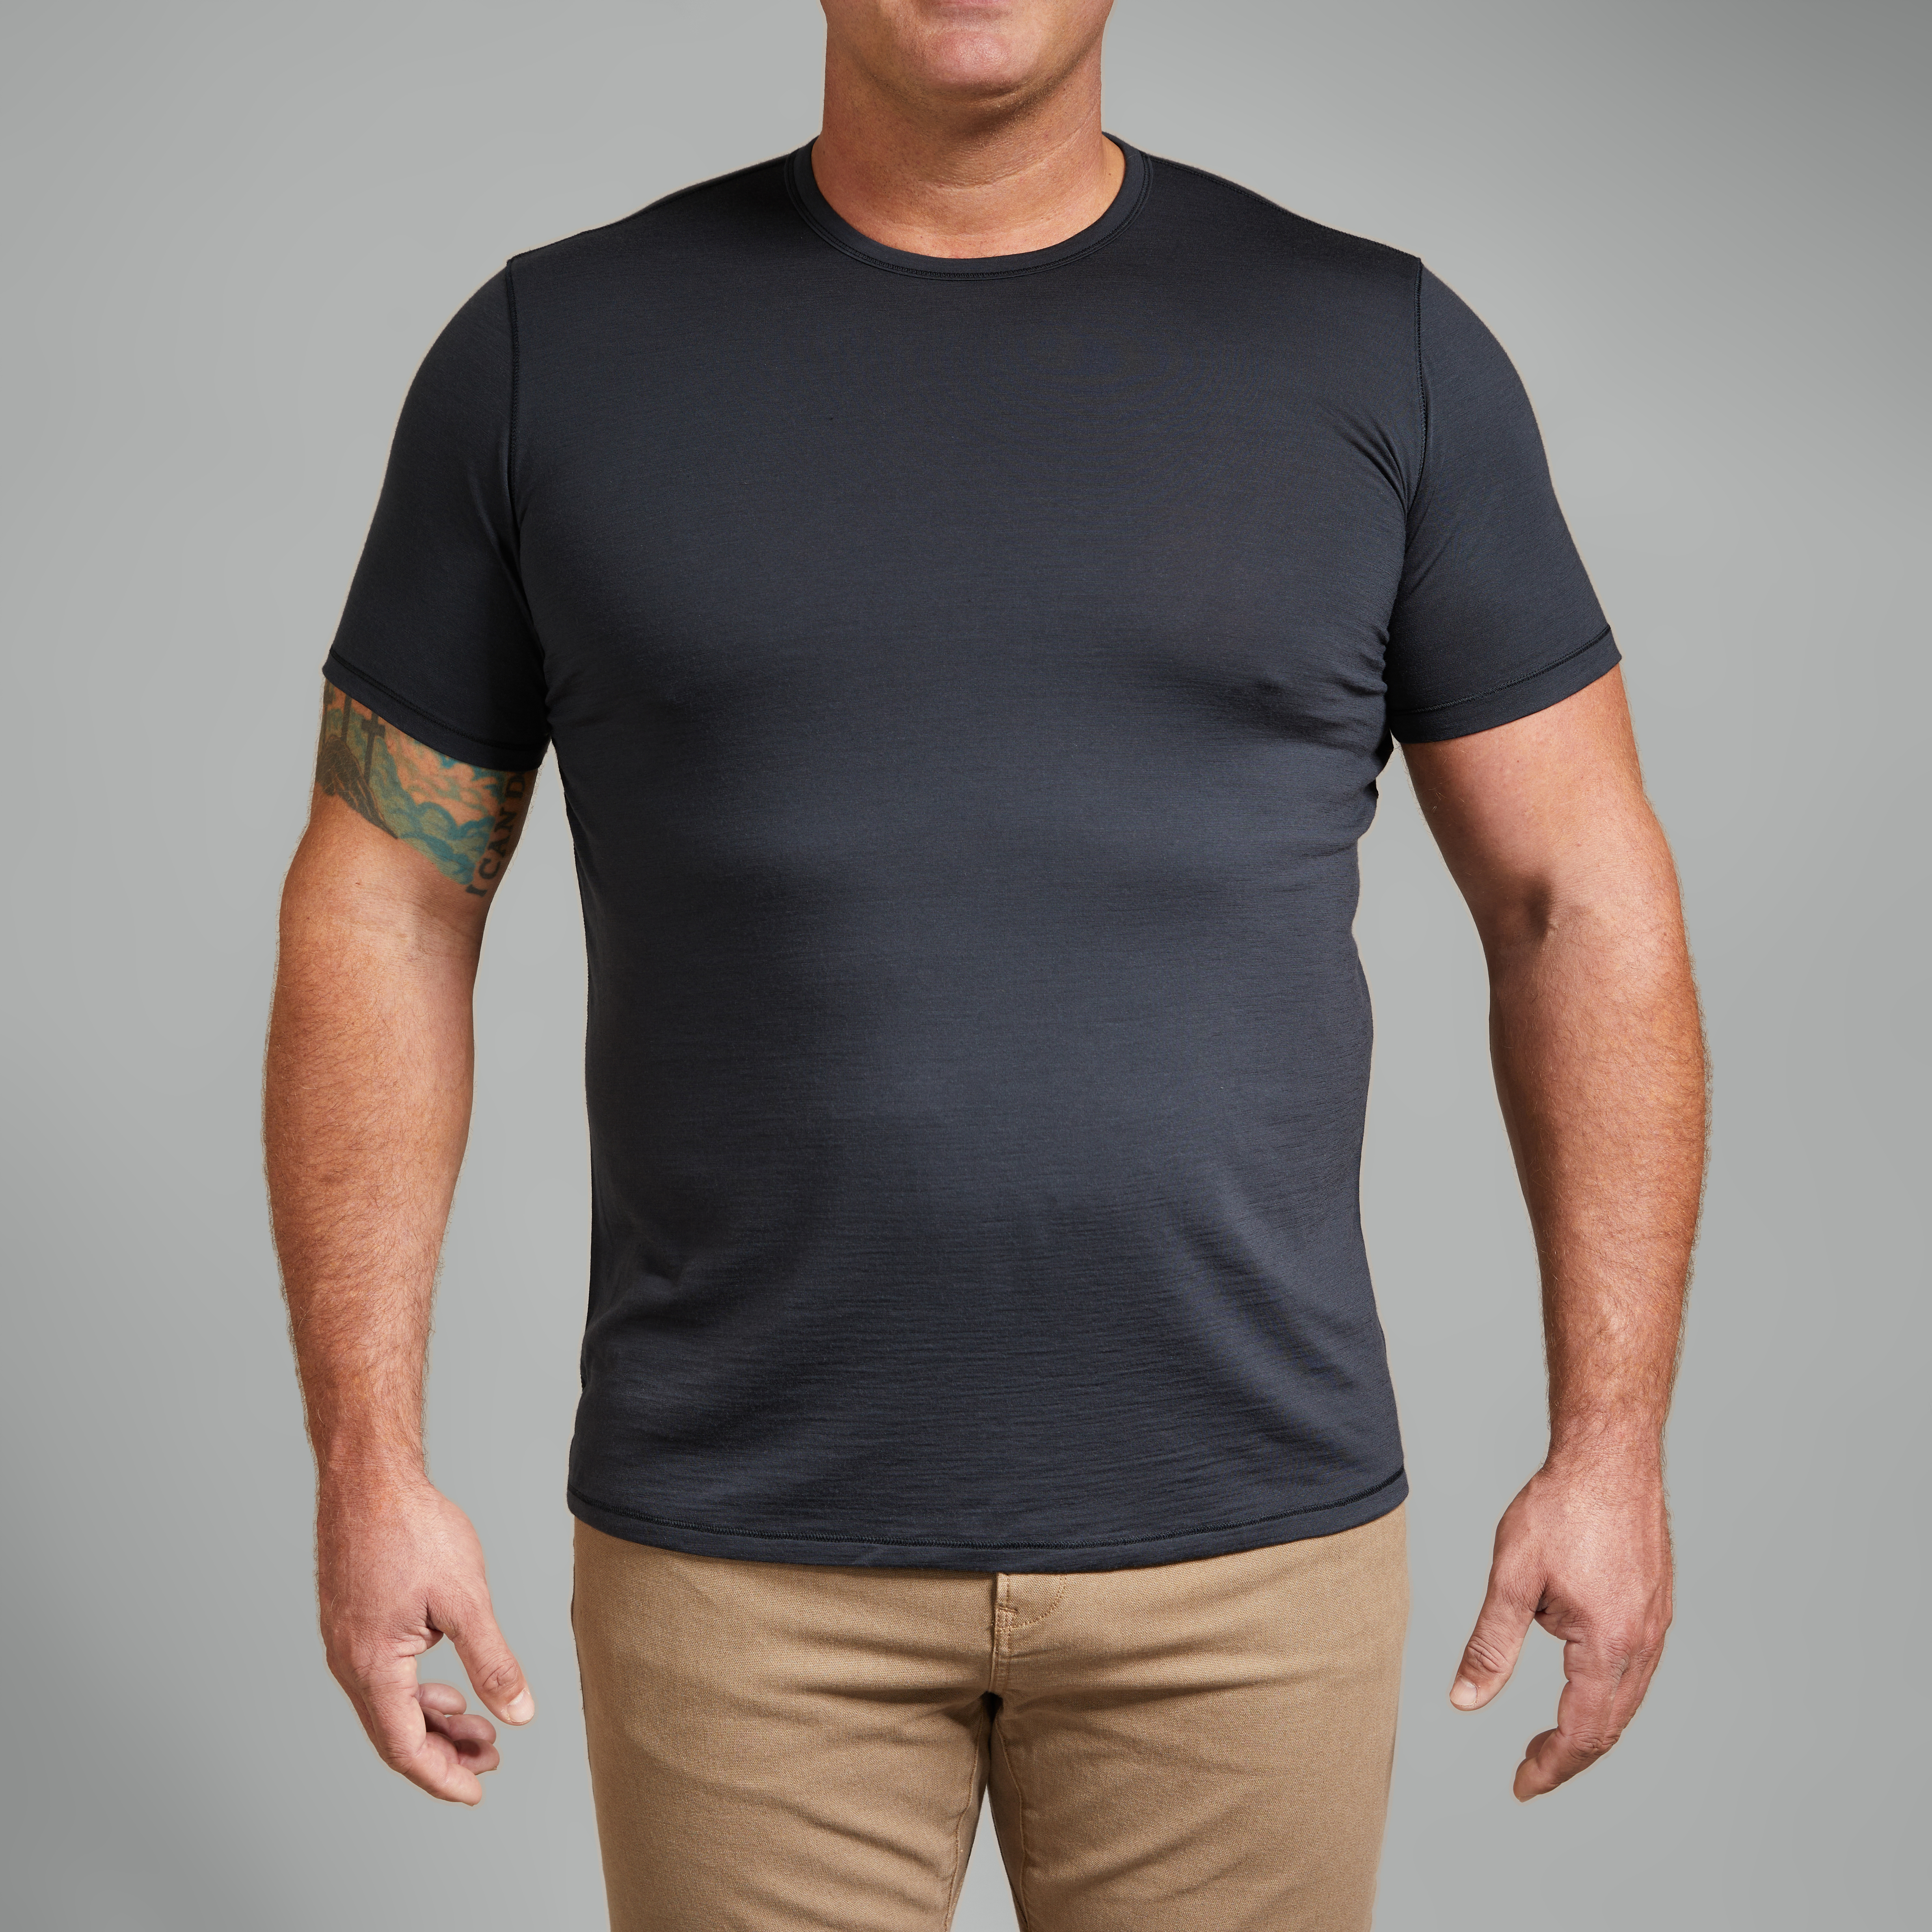 Proof 72-Hour Merino T-Shirt - Classic Fit - Falcon, T-Shirts